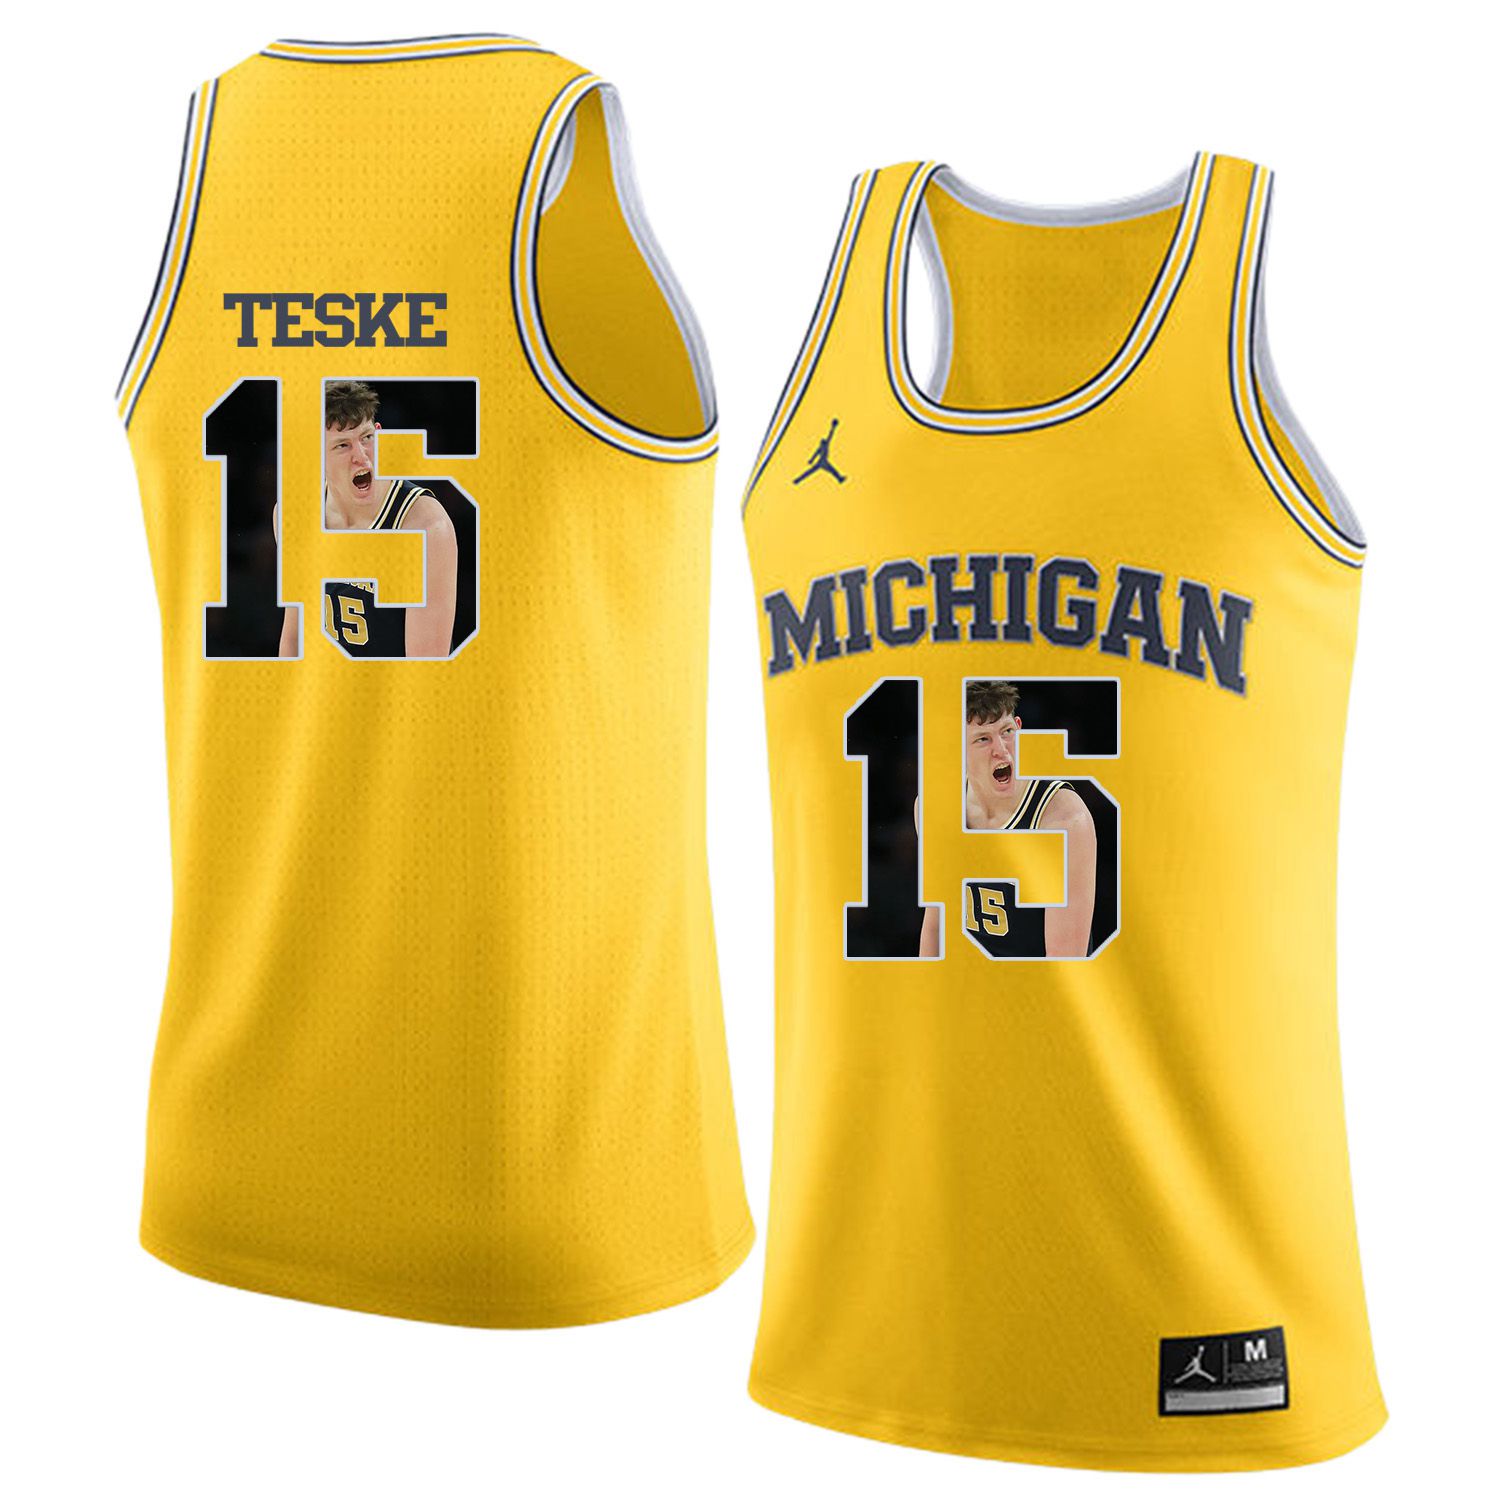 Men Jordan University of Michigan Basketball Yellow 15 Teske Fashion Edition Customized NCAA Jerseys